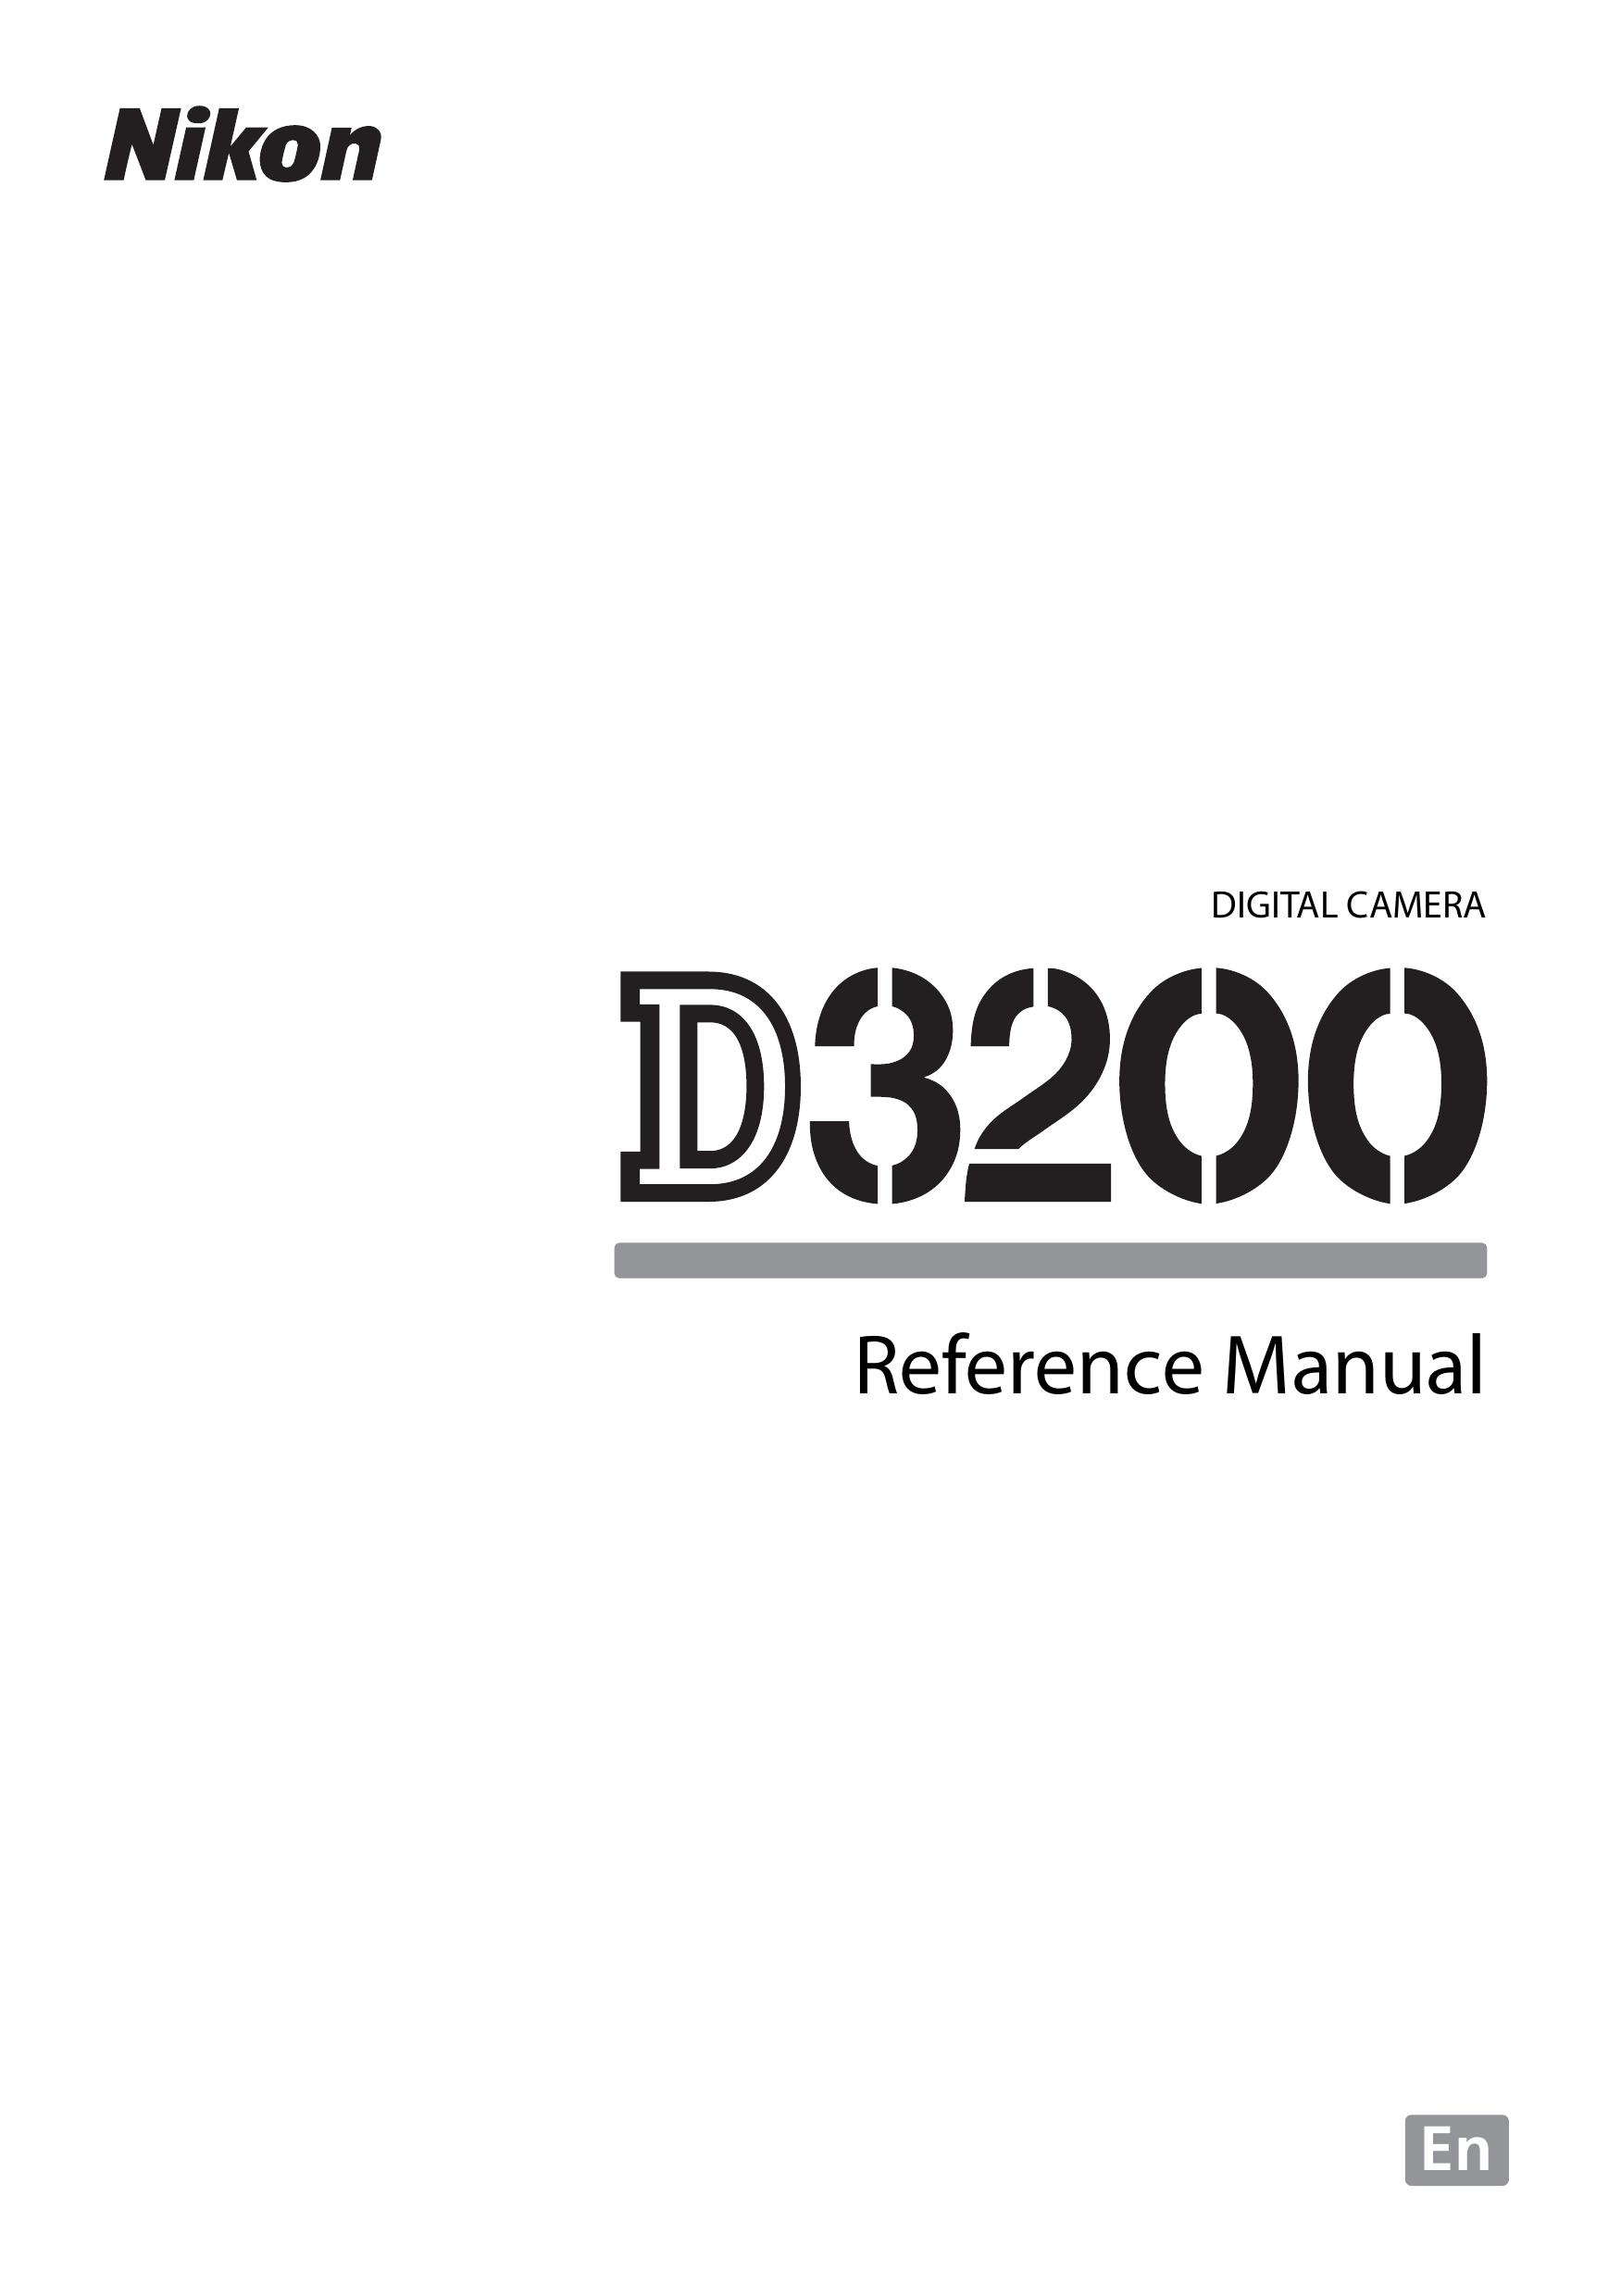 Nikon 13309 Digital Camera User Manual